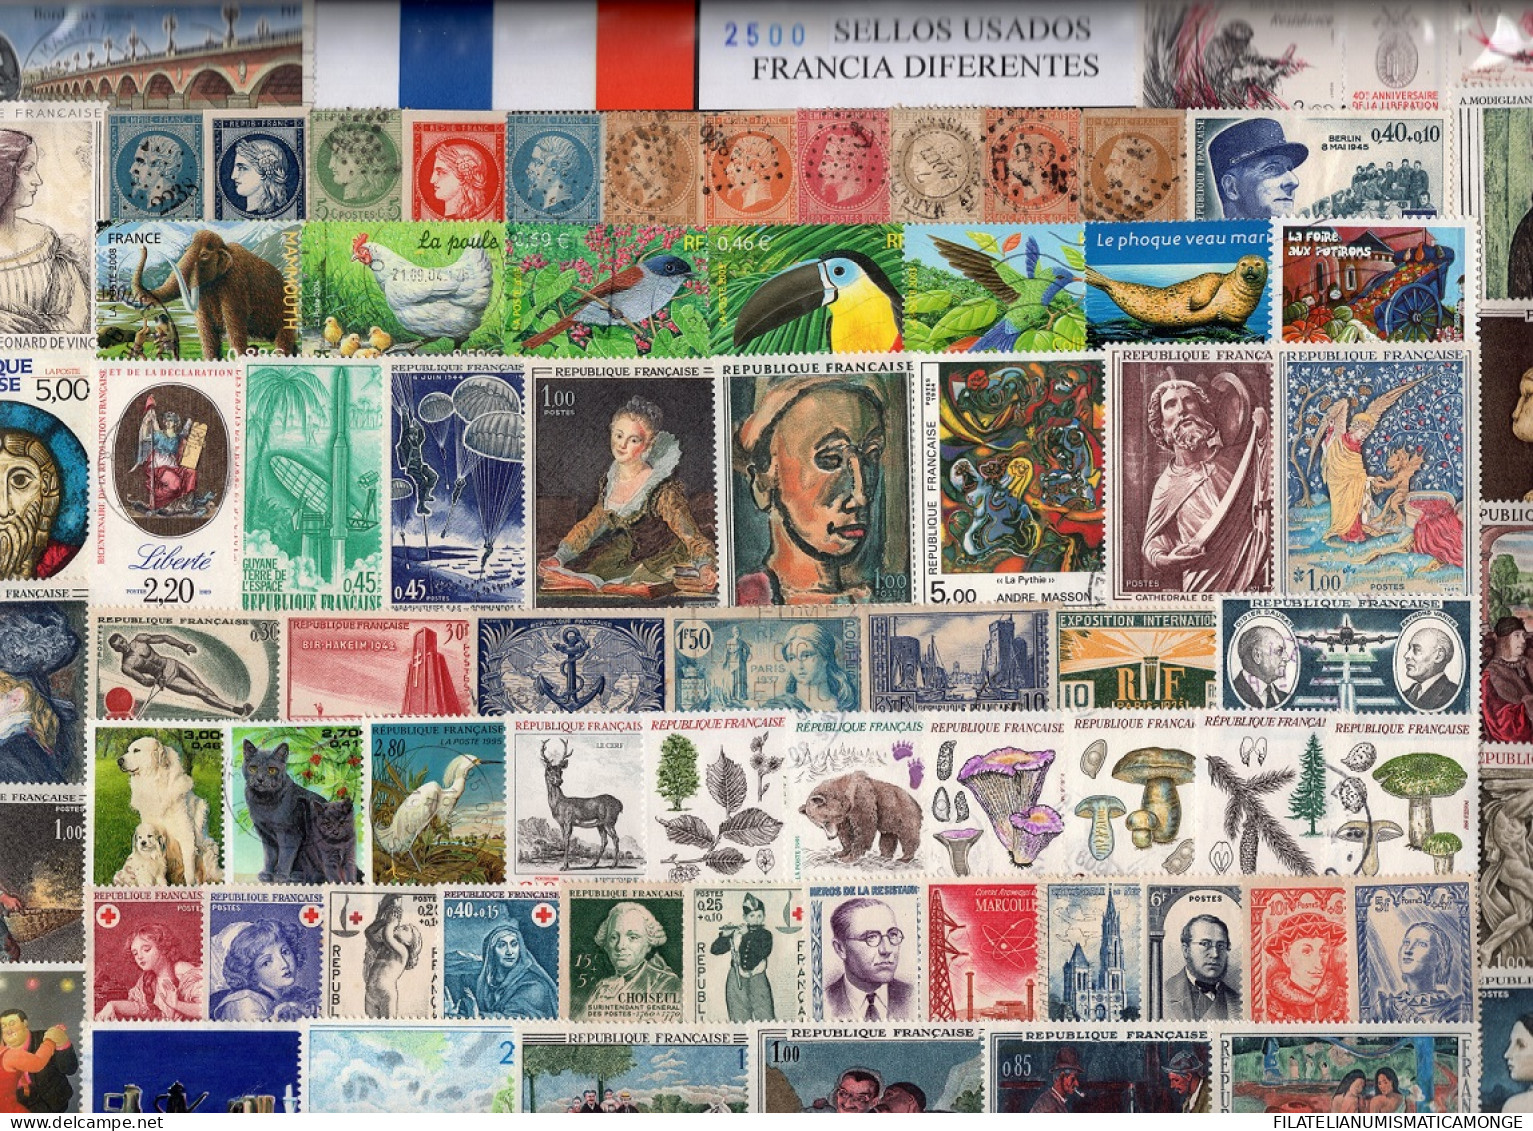  Offer - Lot Stamps - Paqueteria  Francia / Francia 2500 Sellos Diferentes /Ele - Lots & Kiloware (mixtures) - Min. 1000 Stamps